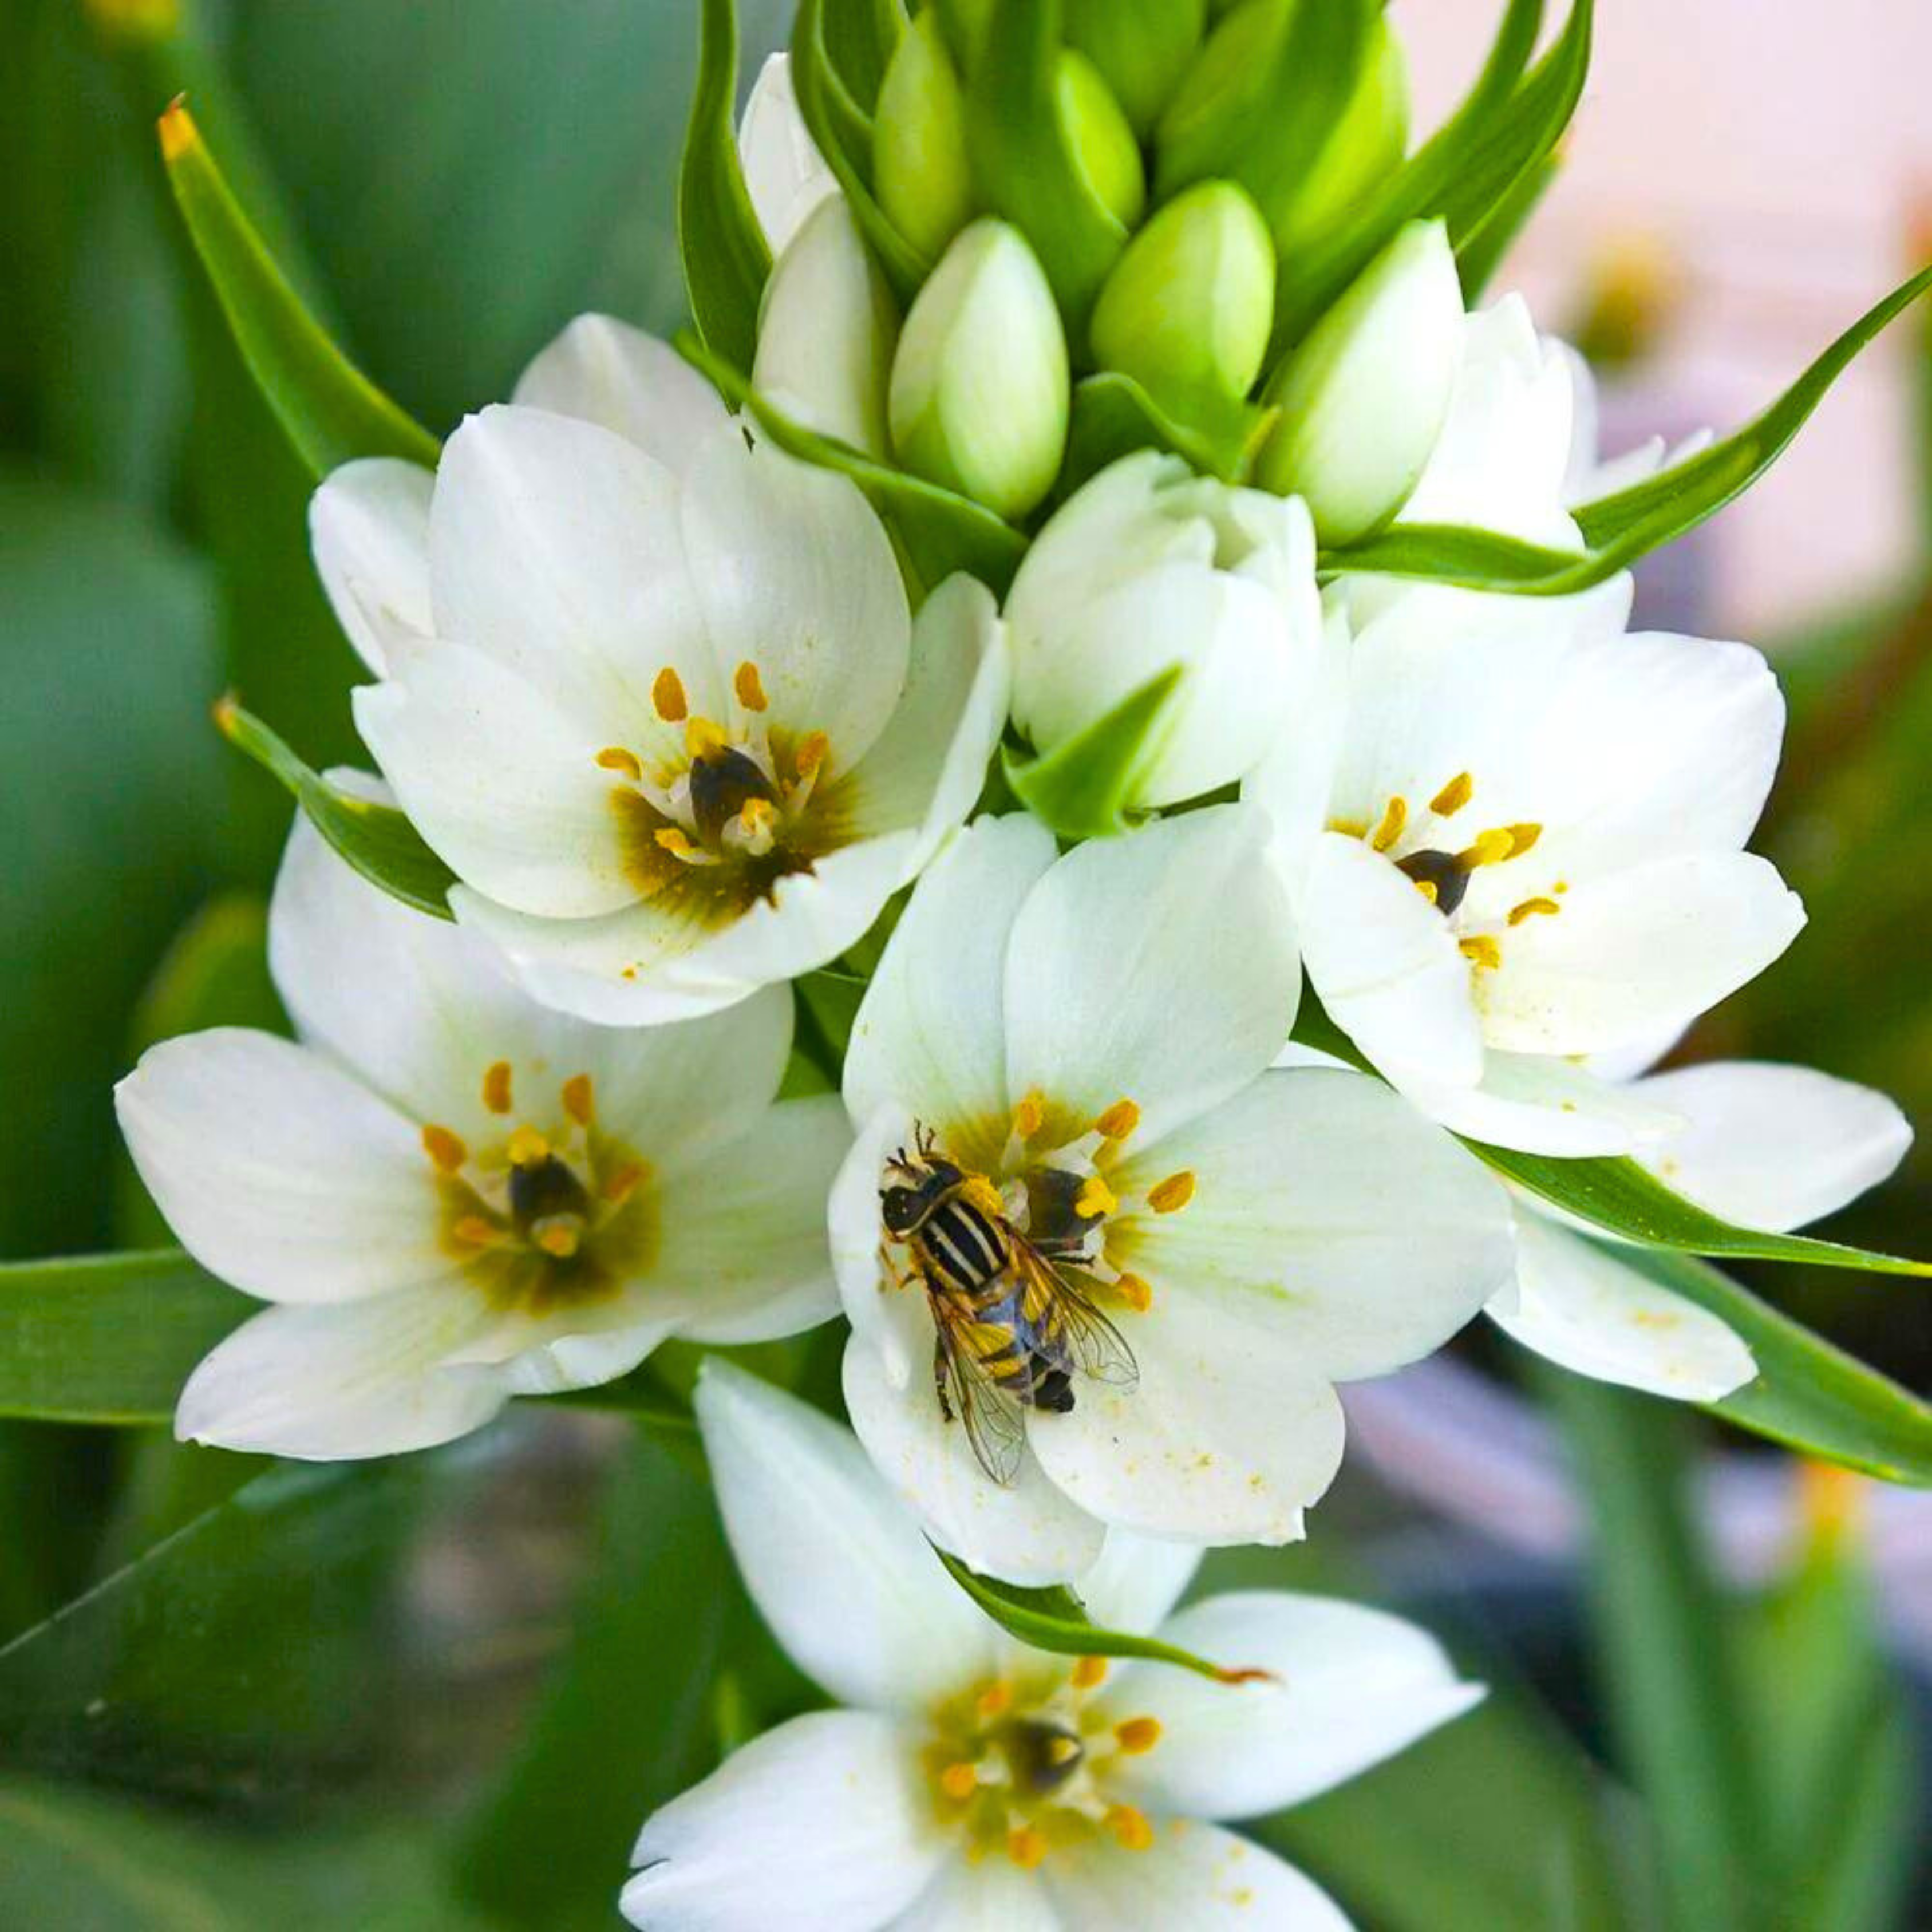 Blue Iris/spurious Iris All Time Flowering Live Plant